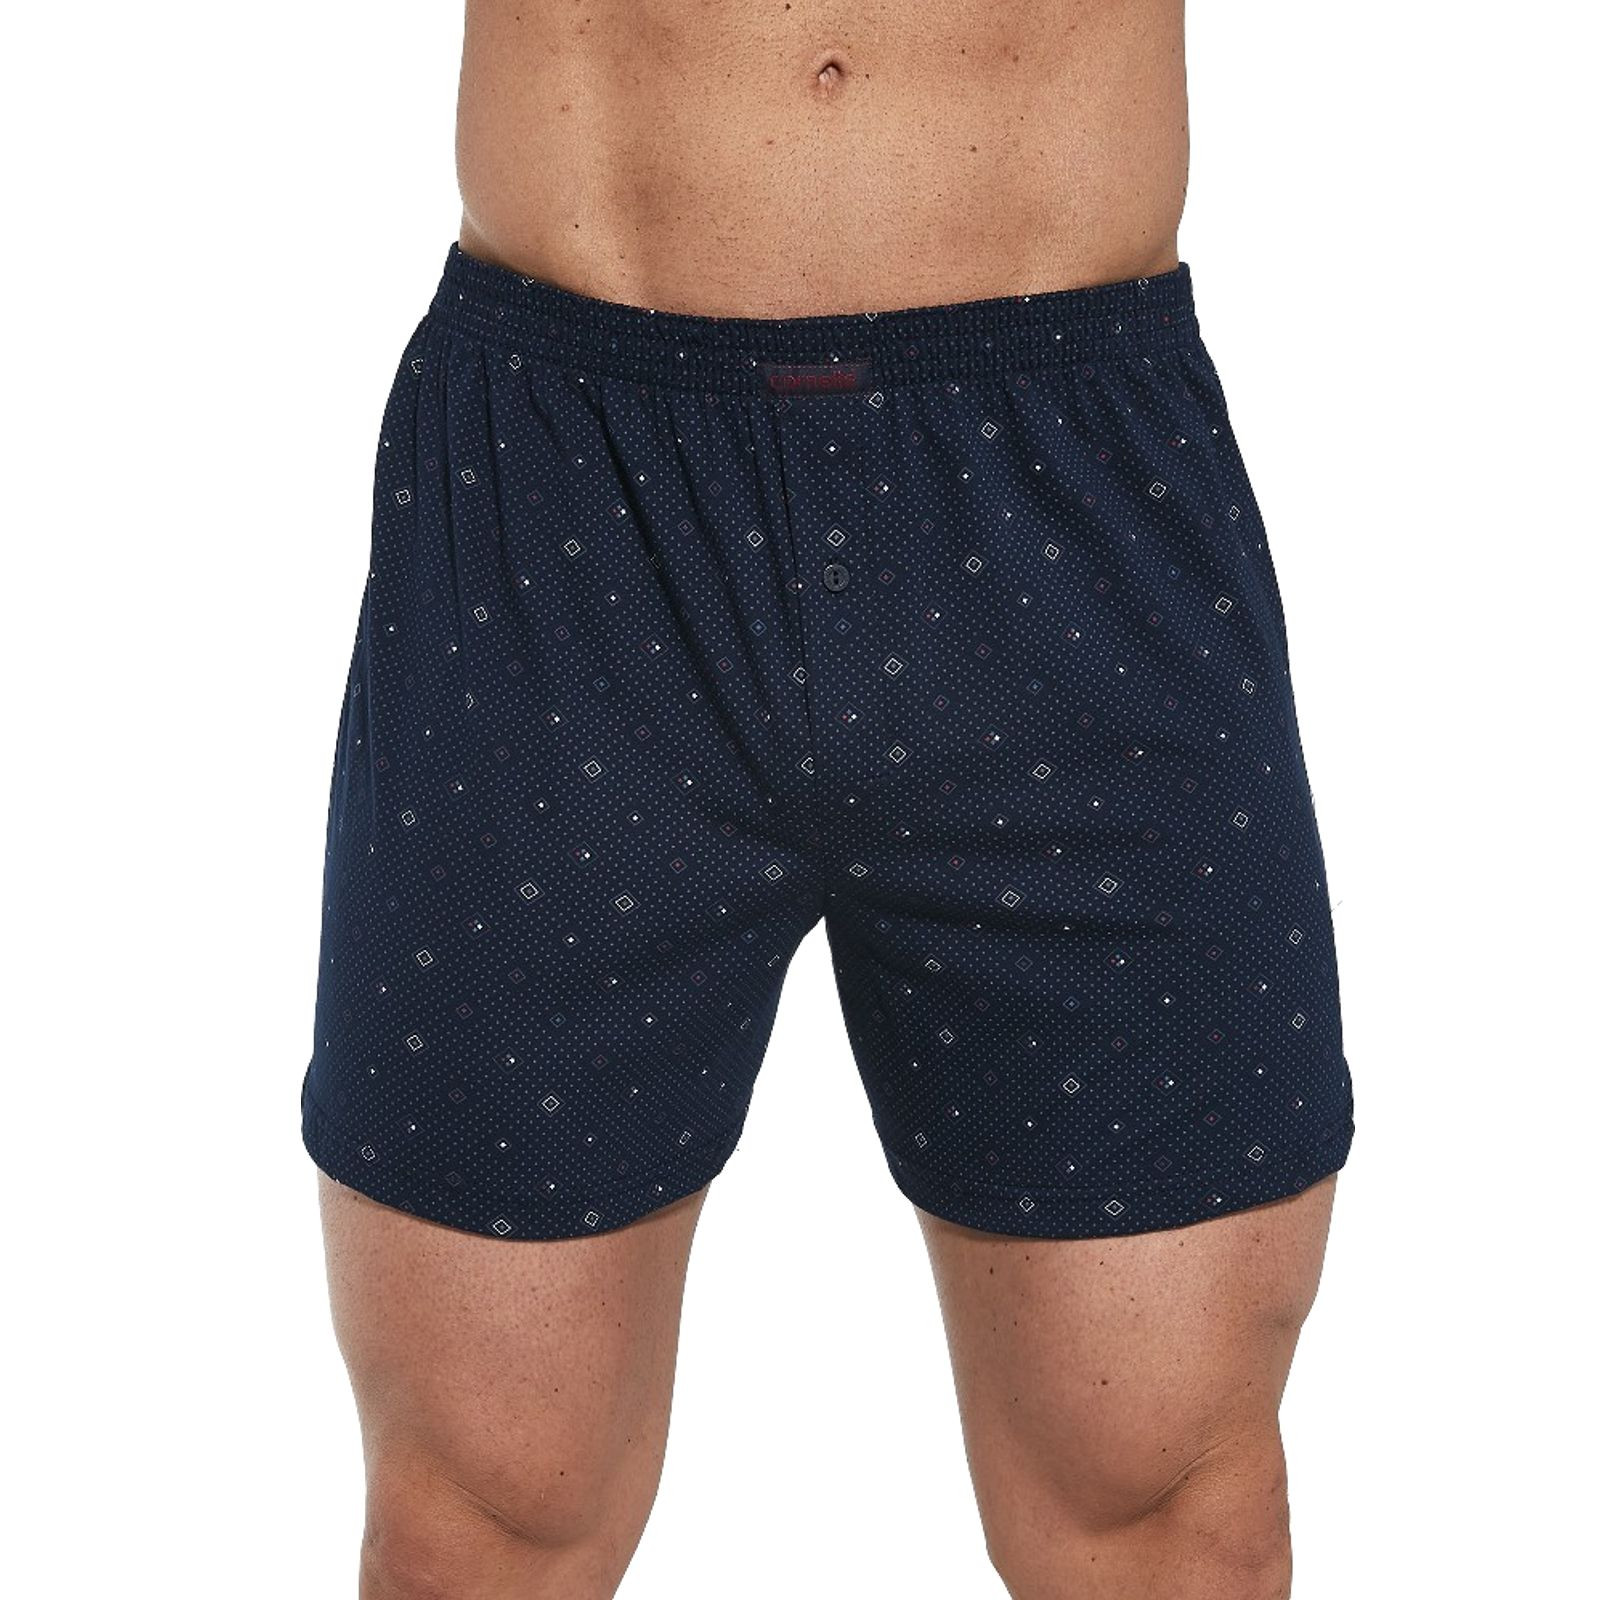 Men's shorts Cornette Comfort blue